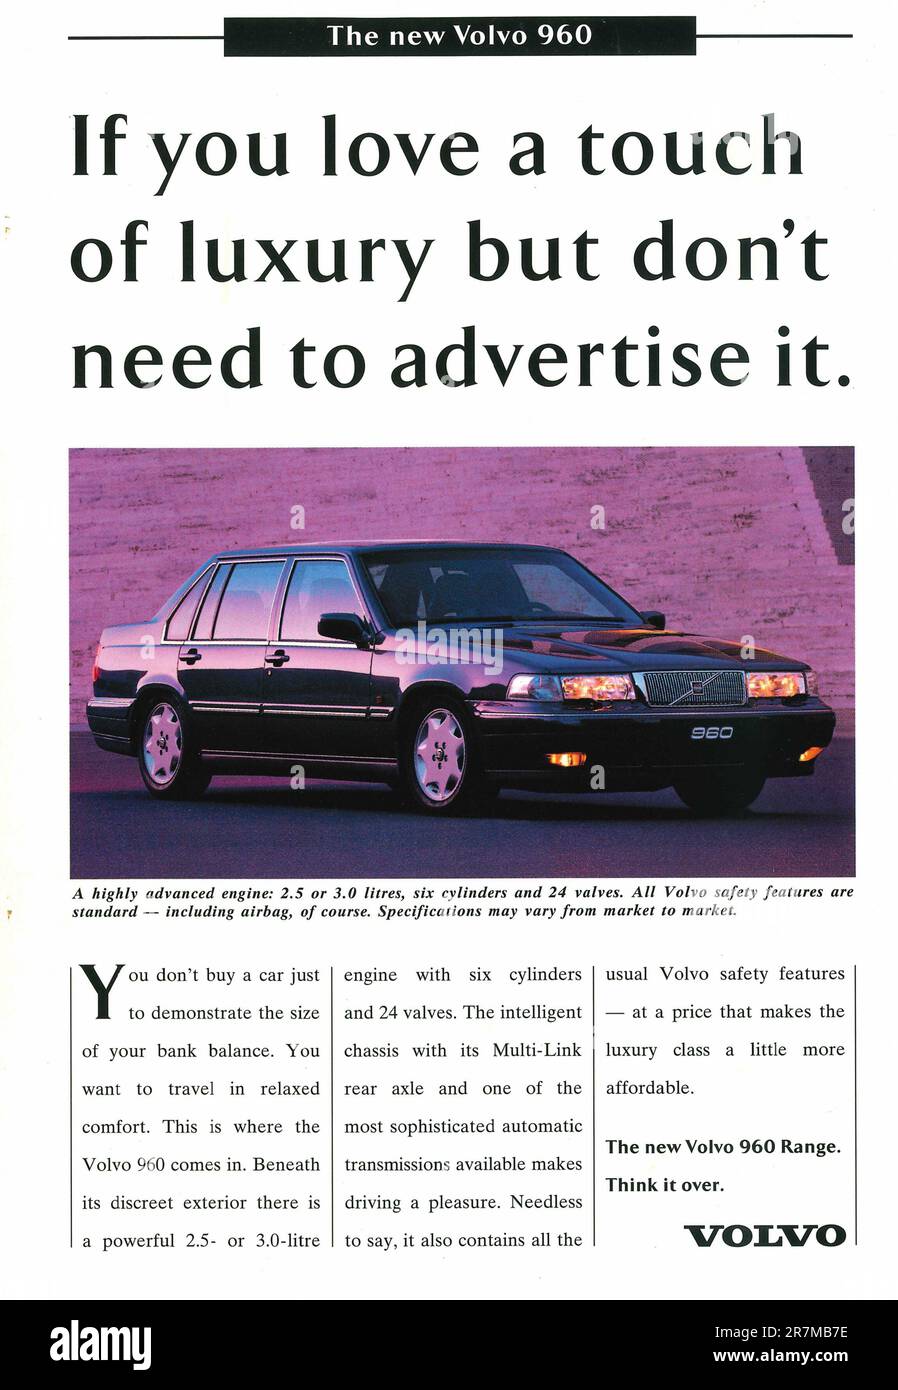 Volvo 960 advertisement placed inside a NatGeo magazine, 1990s Stock Photo